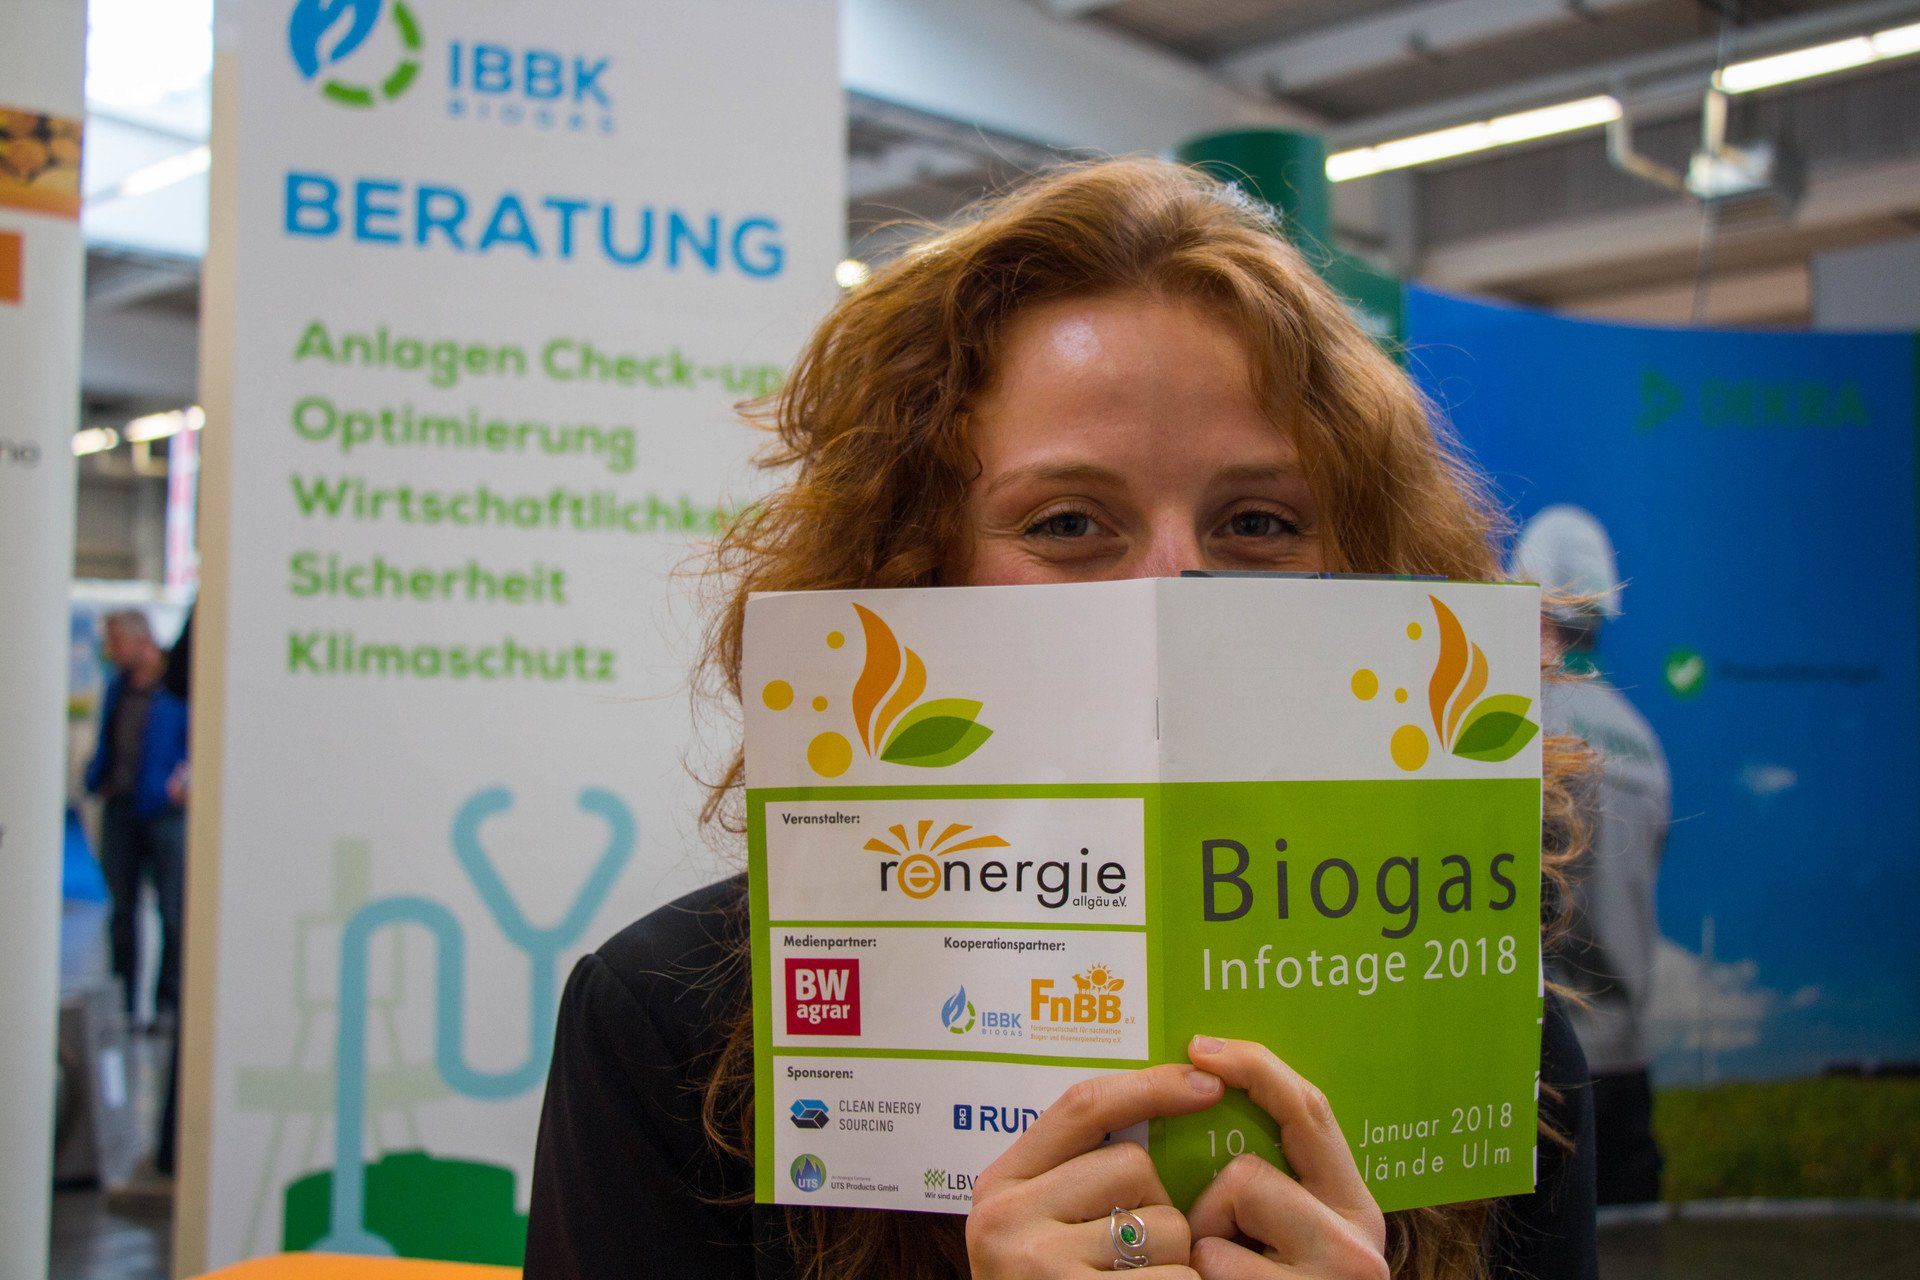 IBBK Stuttgart 2017, 7-day Biogas #HANDS ON course – Birgit Pfeifer testing digester substrate at the plant.